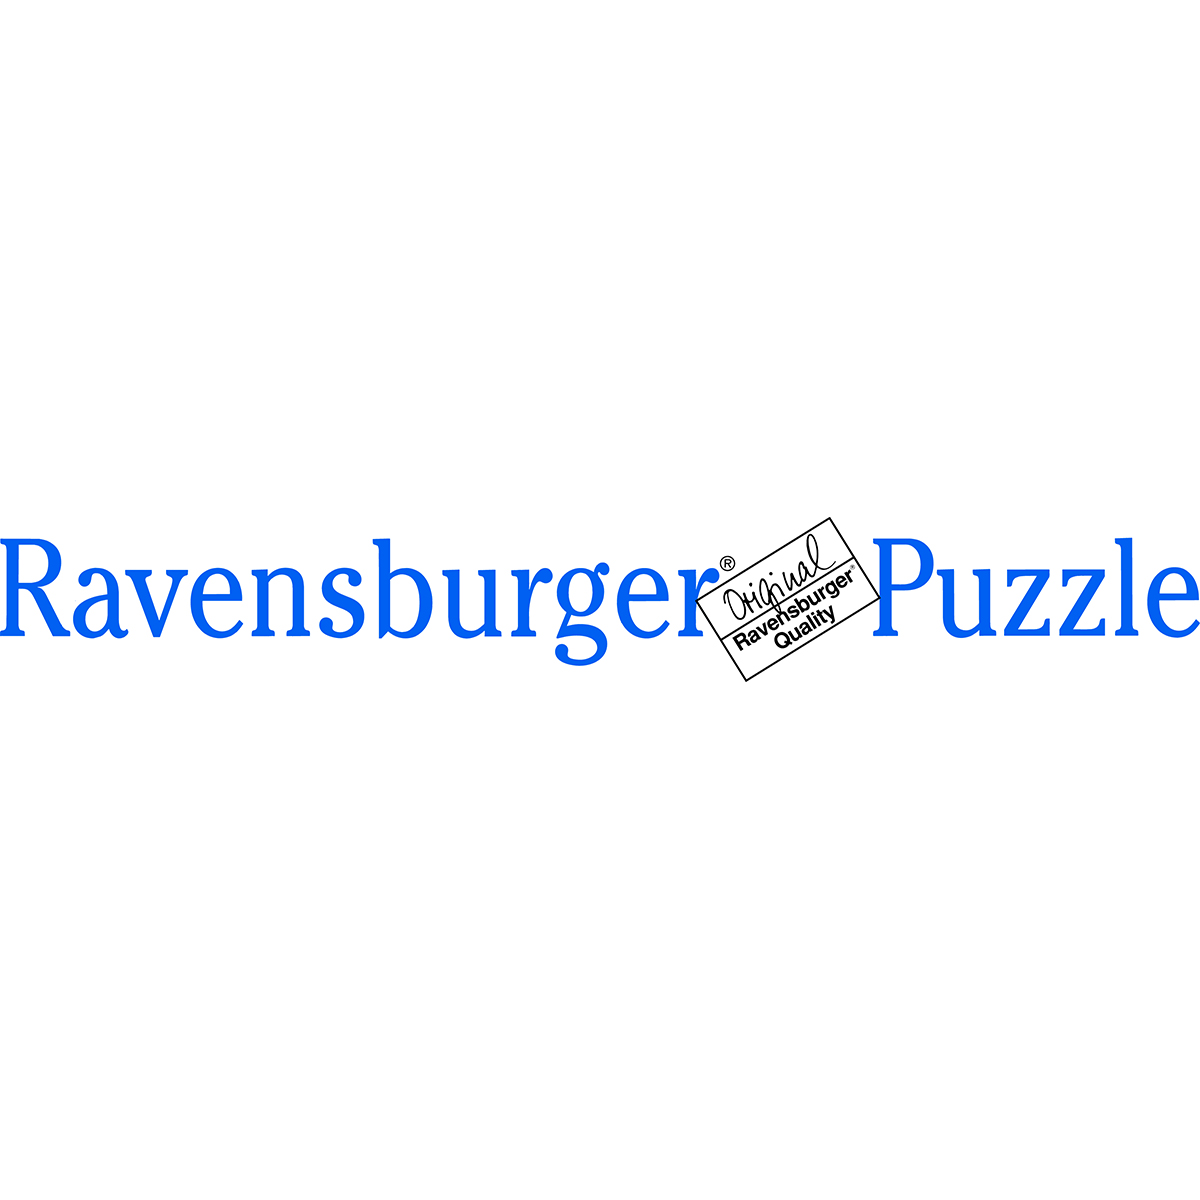 Ravensburger - puzzle 24 pezzi - formato giant - per bambini a partire dai 3 anni - peppa pig - 05530 - PEPPA PIG, RAVENSBURGER